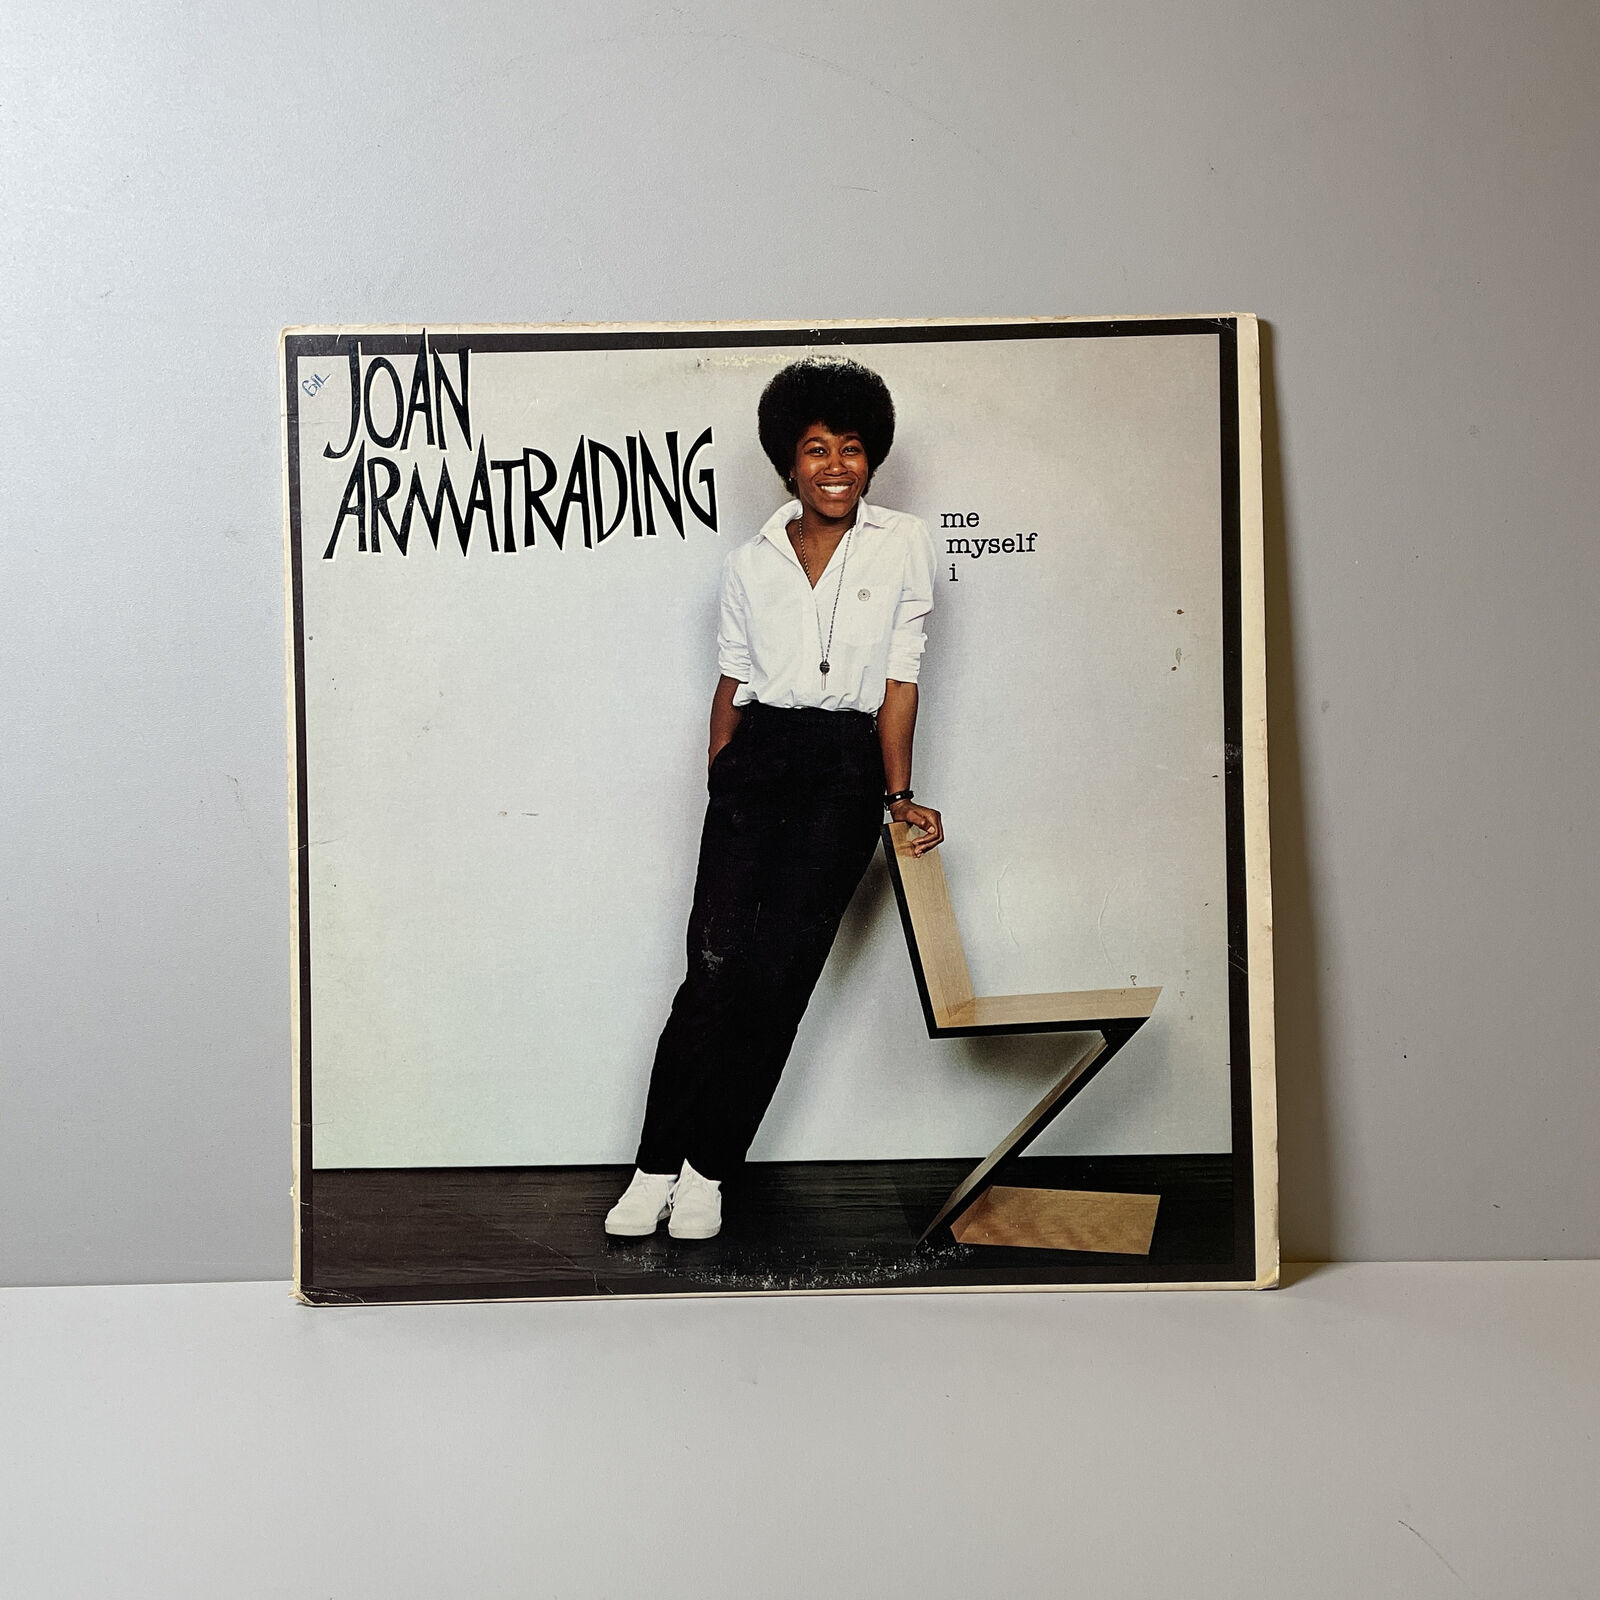 Joan Armatrading - Me Myself I - Vinyl LP Record - 1980